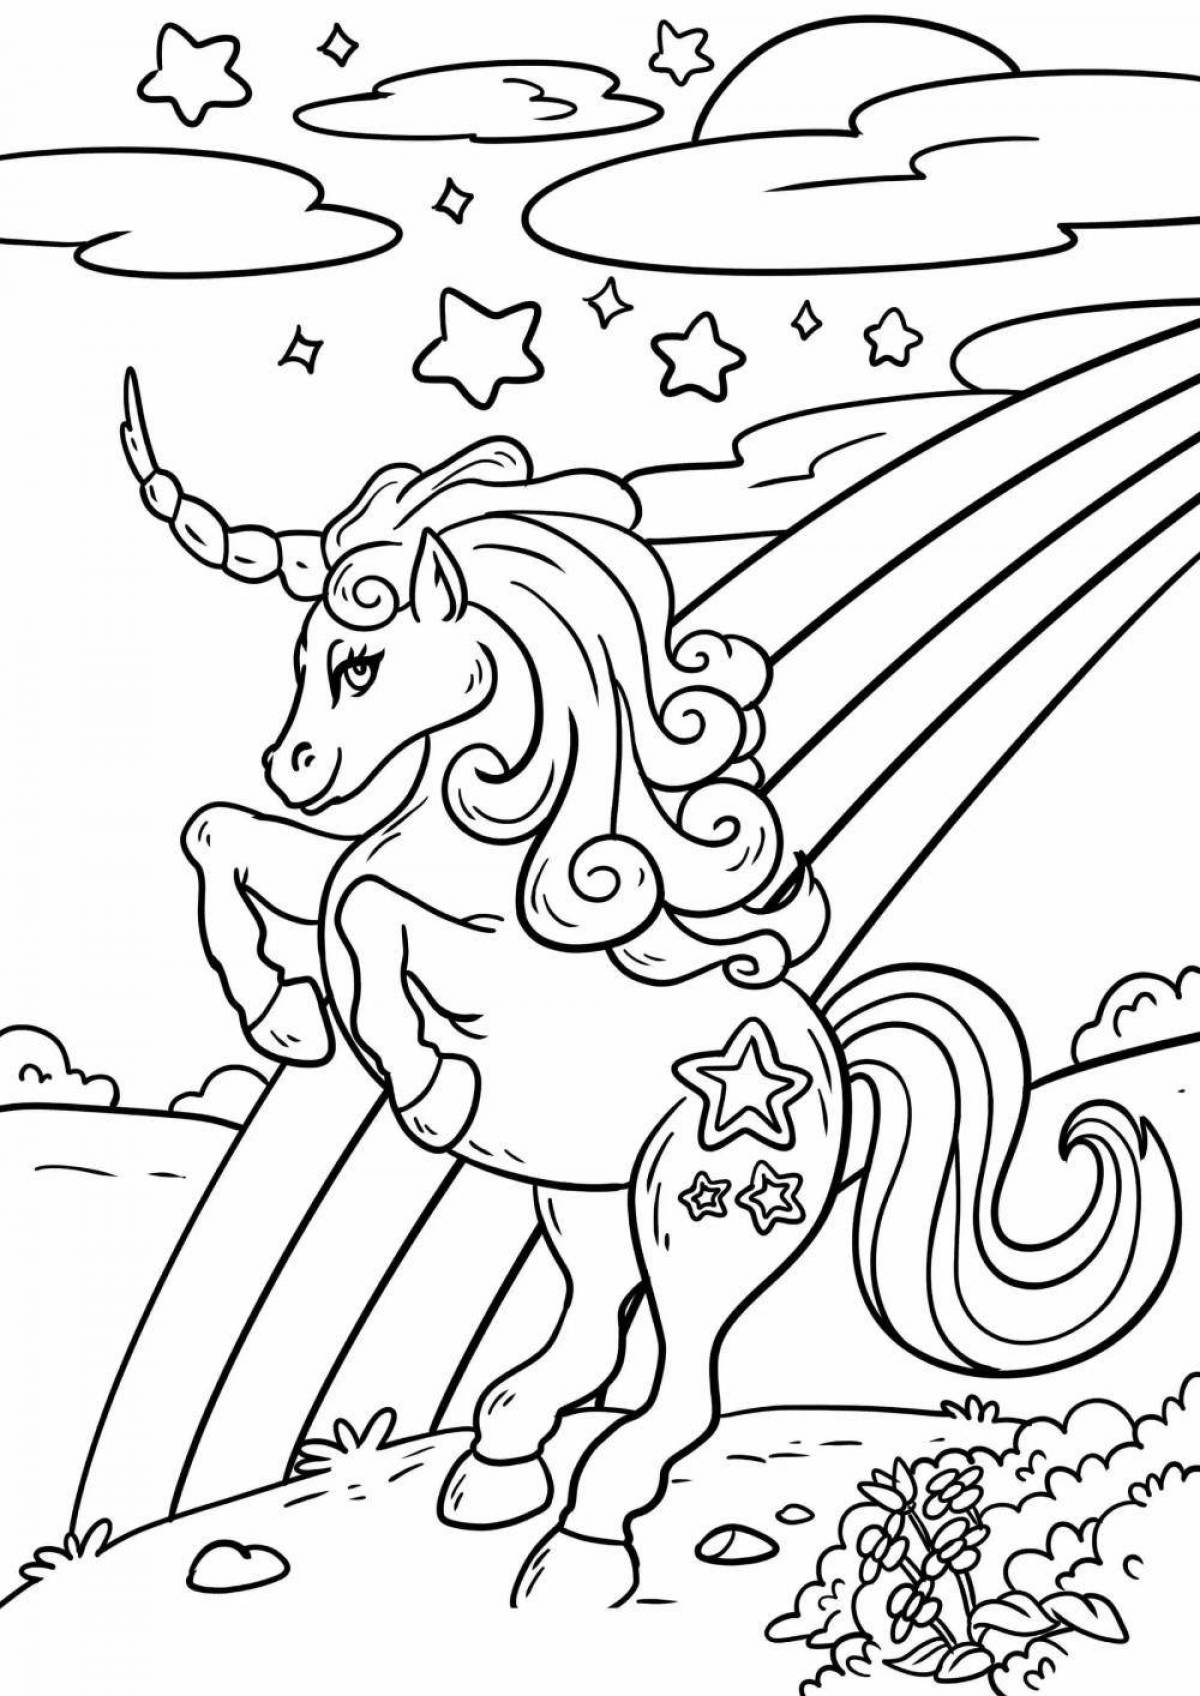 Fabulous unicorn drawing for kids